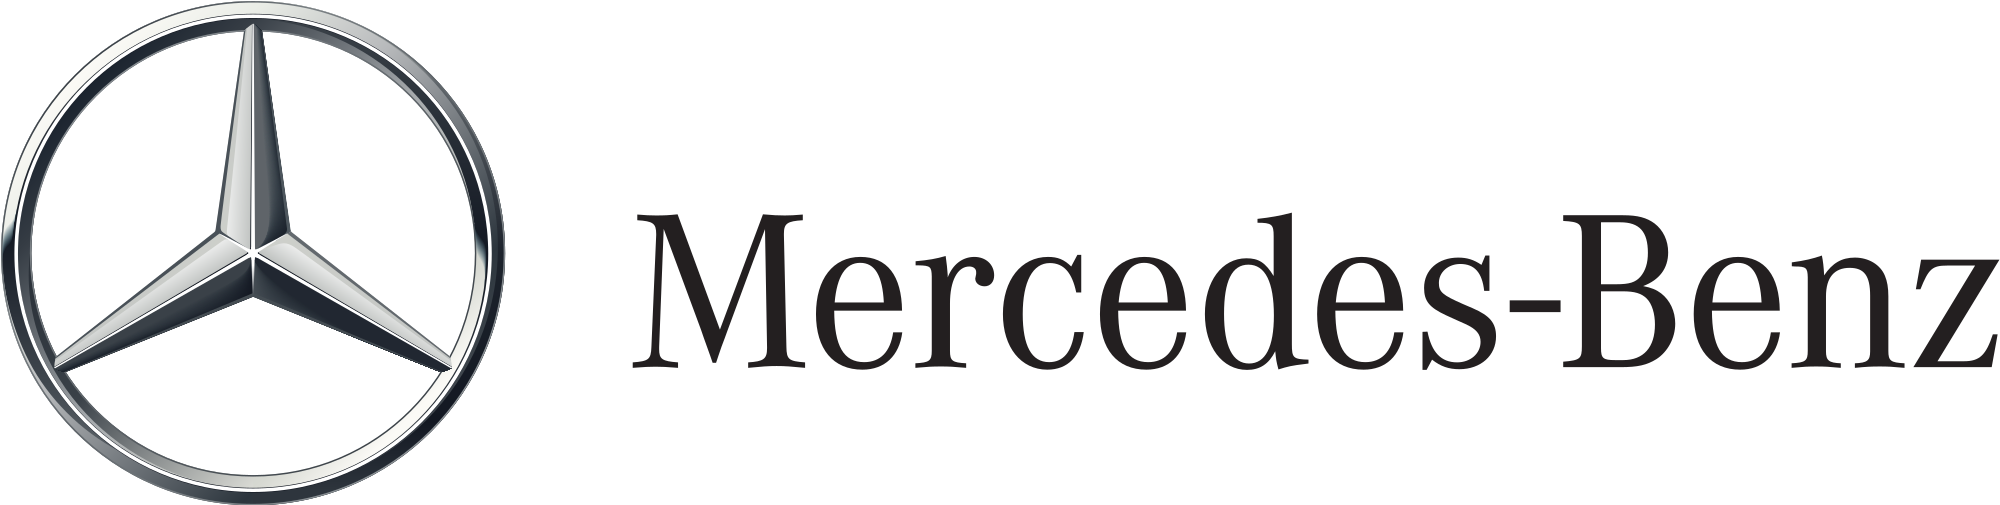 2000px-mercedes-benz_logo_2010_svg.png